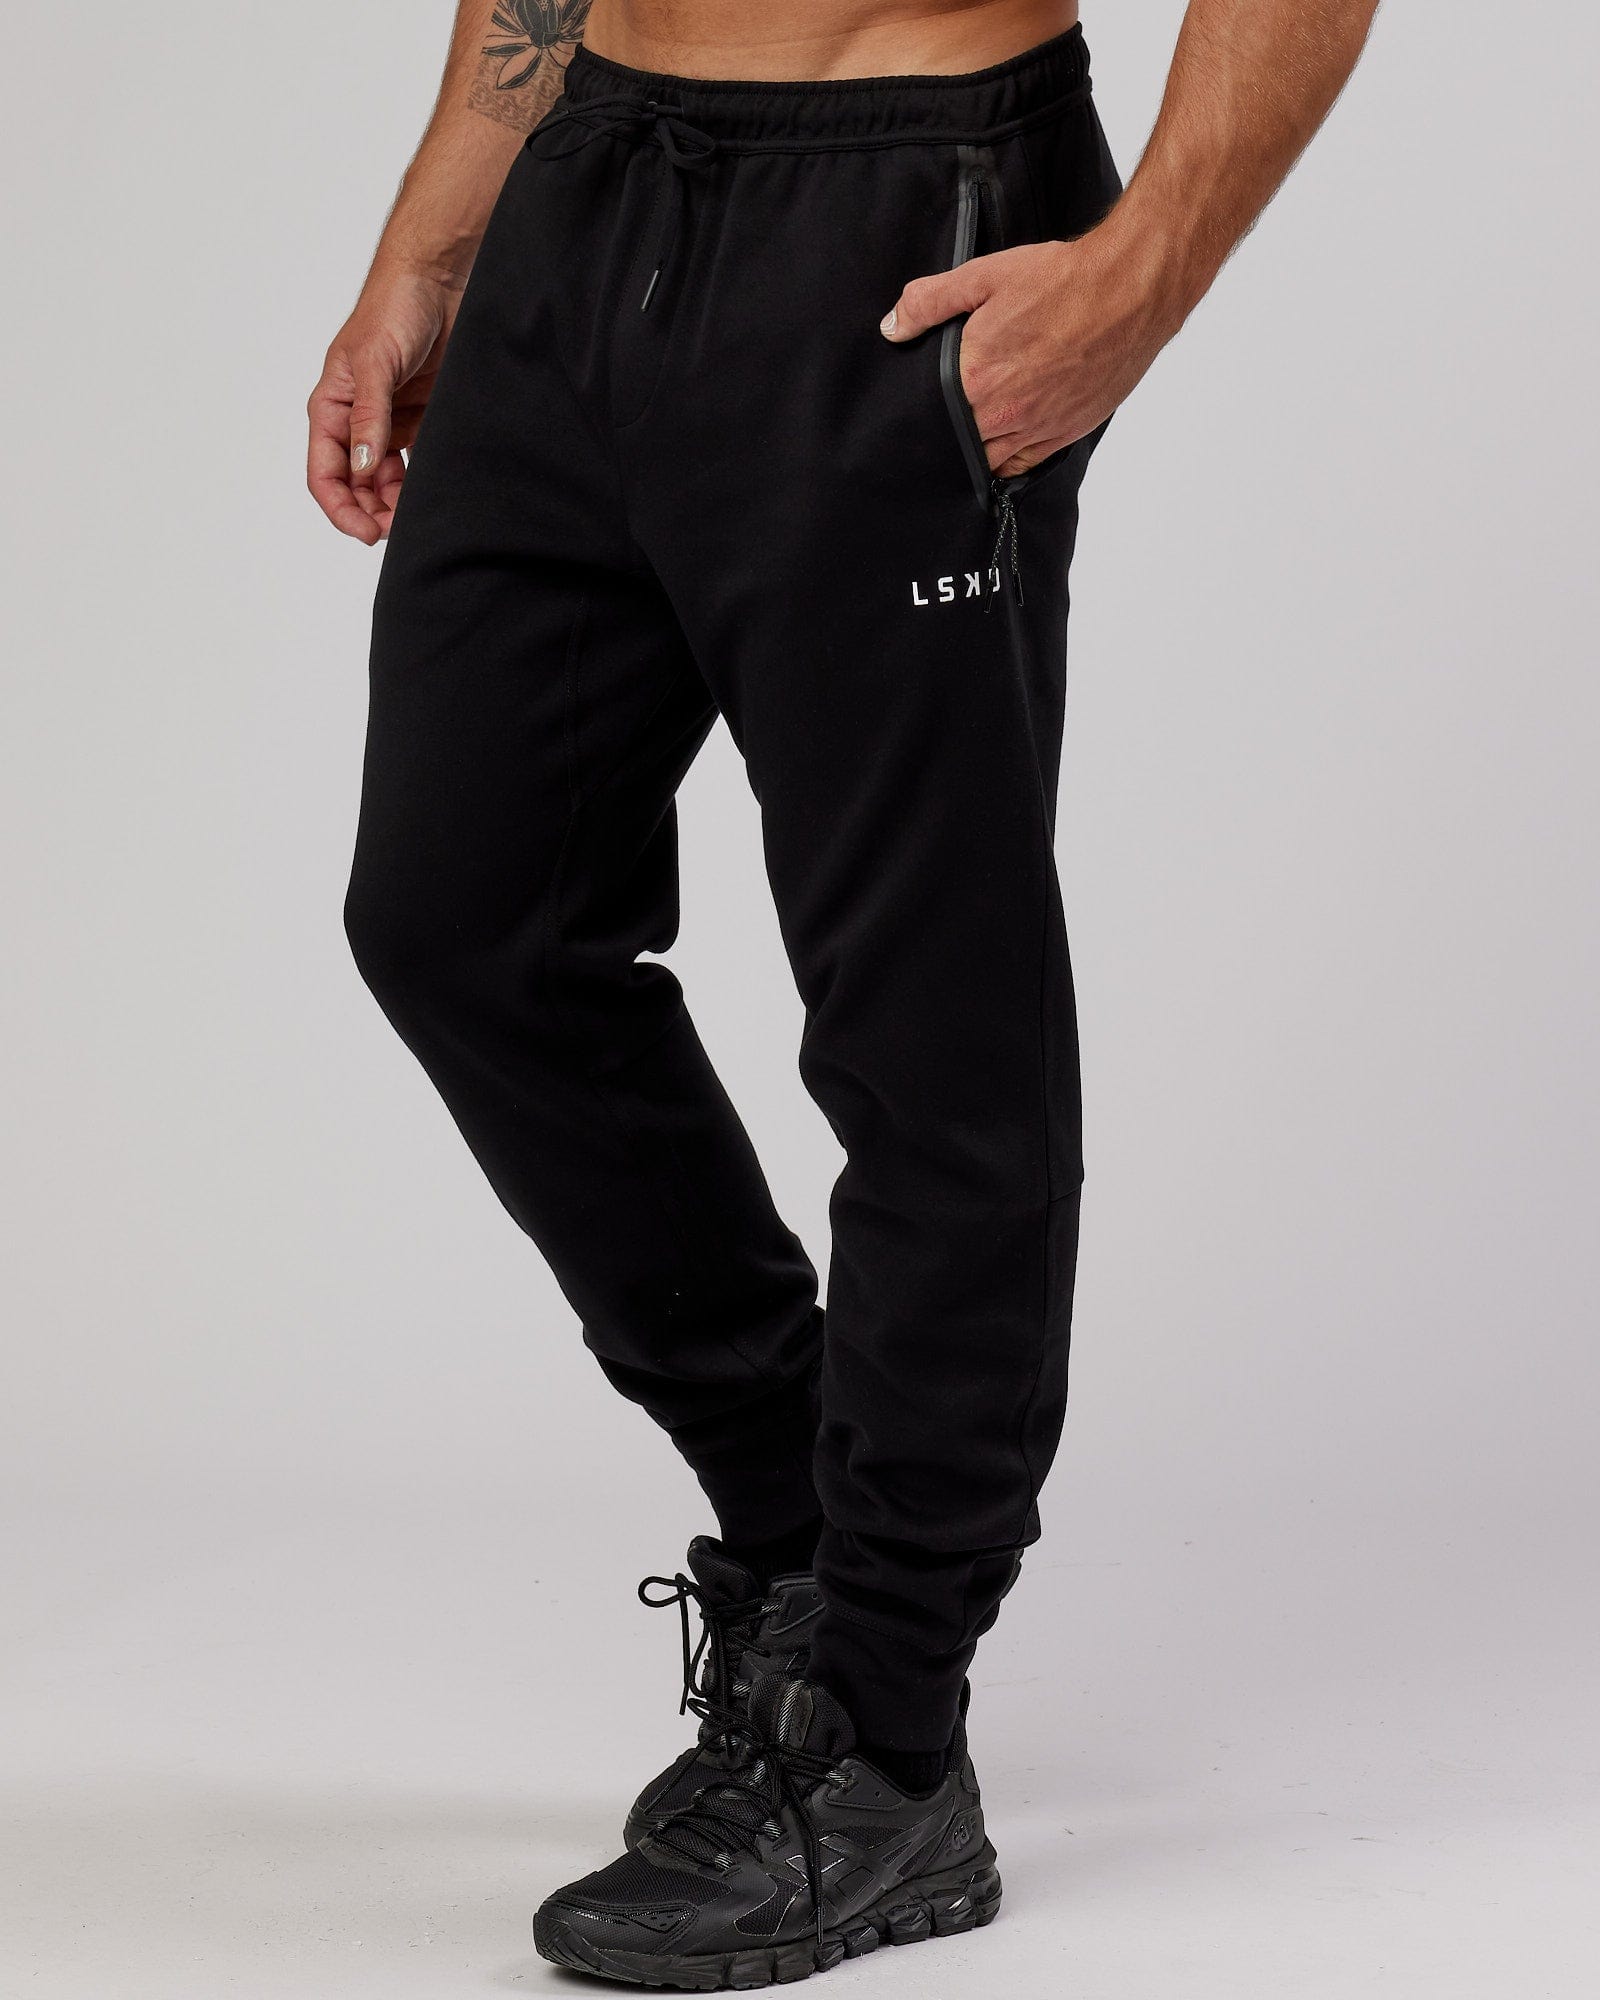 adidas Originals x Jeremy Scott Big Zip Track Pants | Finish Line